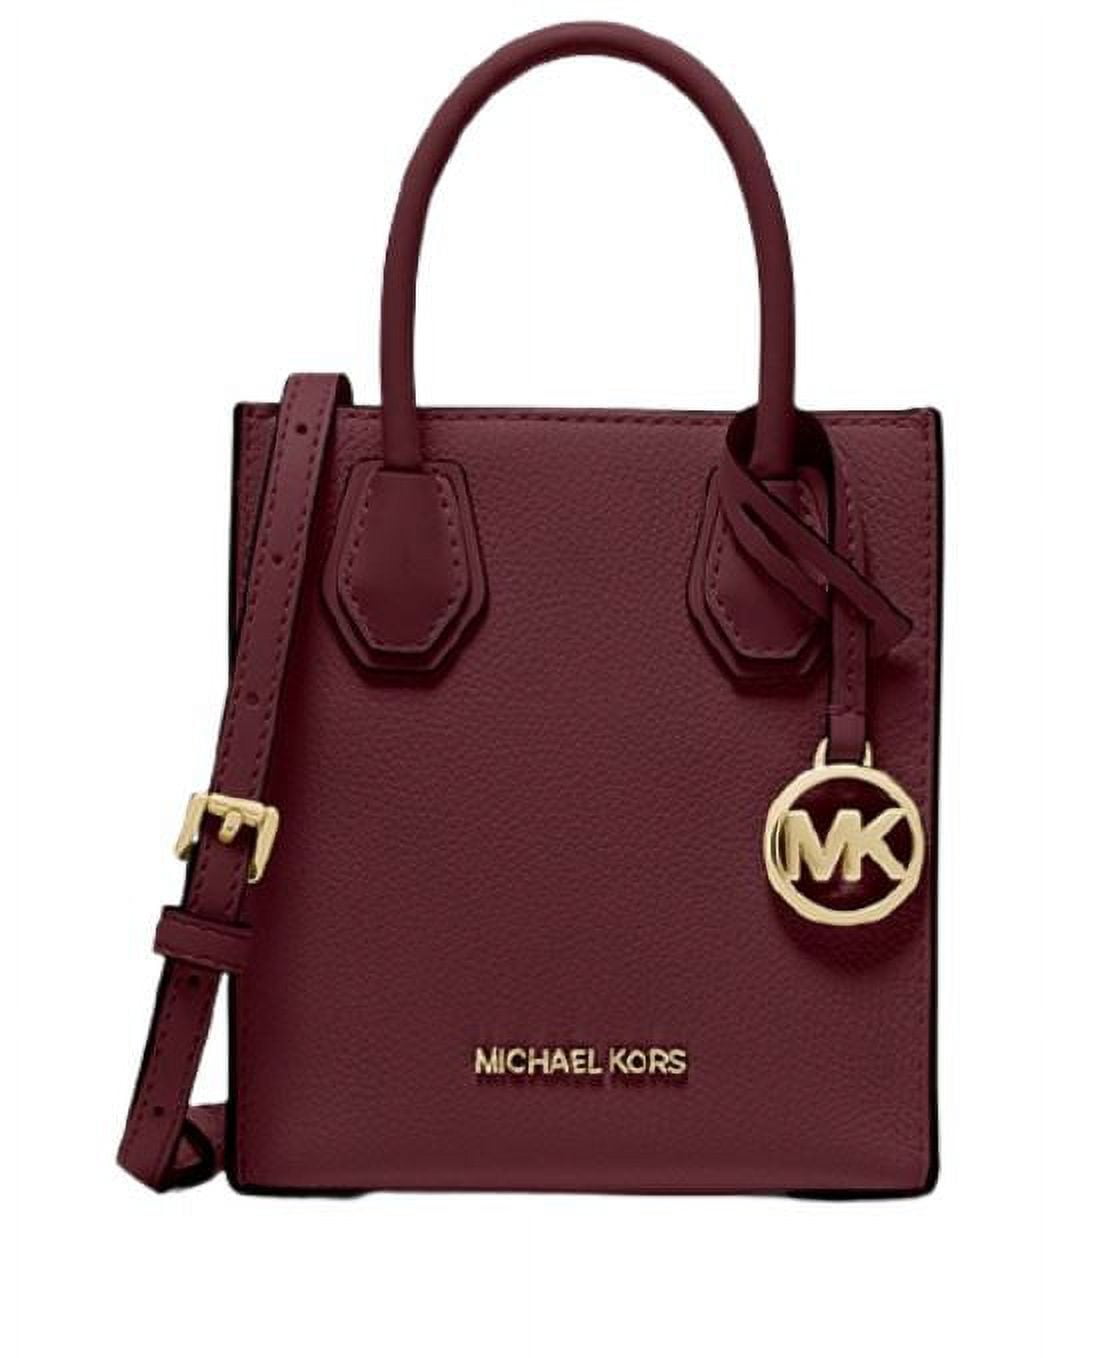 Michael Kors Mercer Bags for Women - Up to 50% off